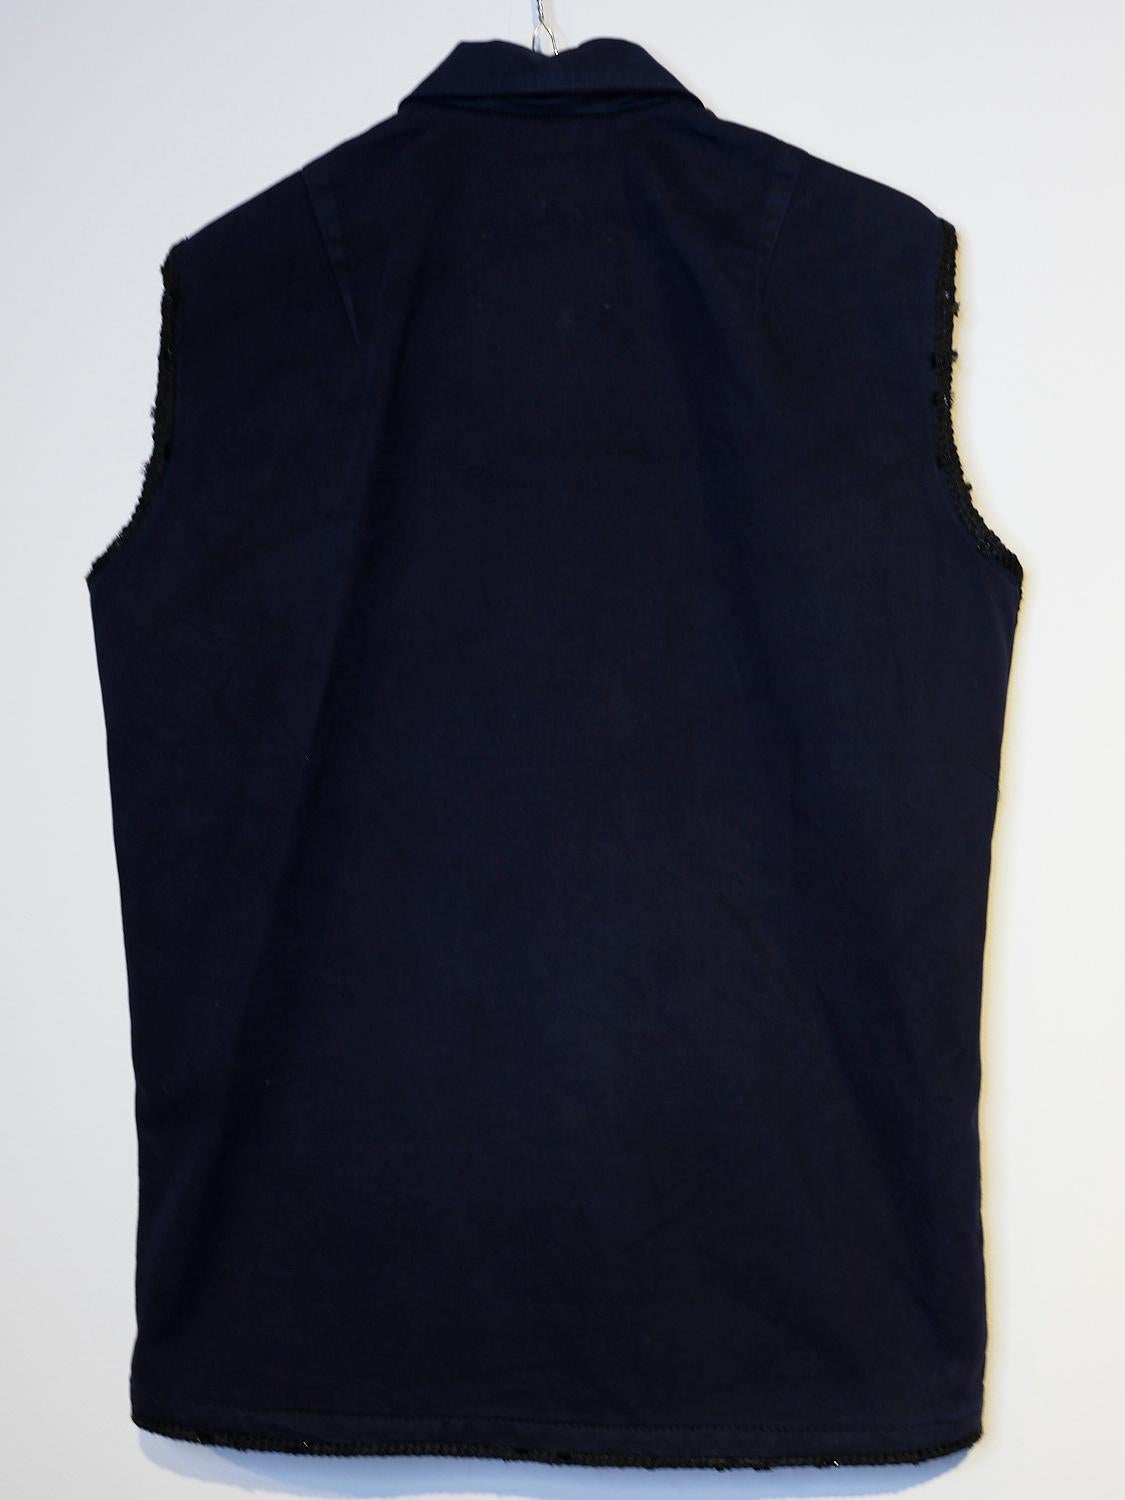 Women's Embellished Sleeveless Jacket Dark Blue Vest Military Tweed Pockets J Dauphin